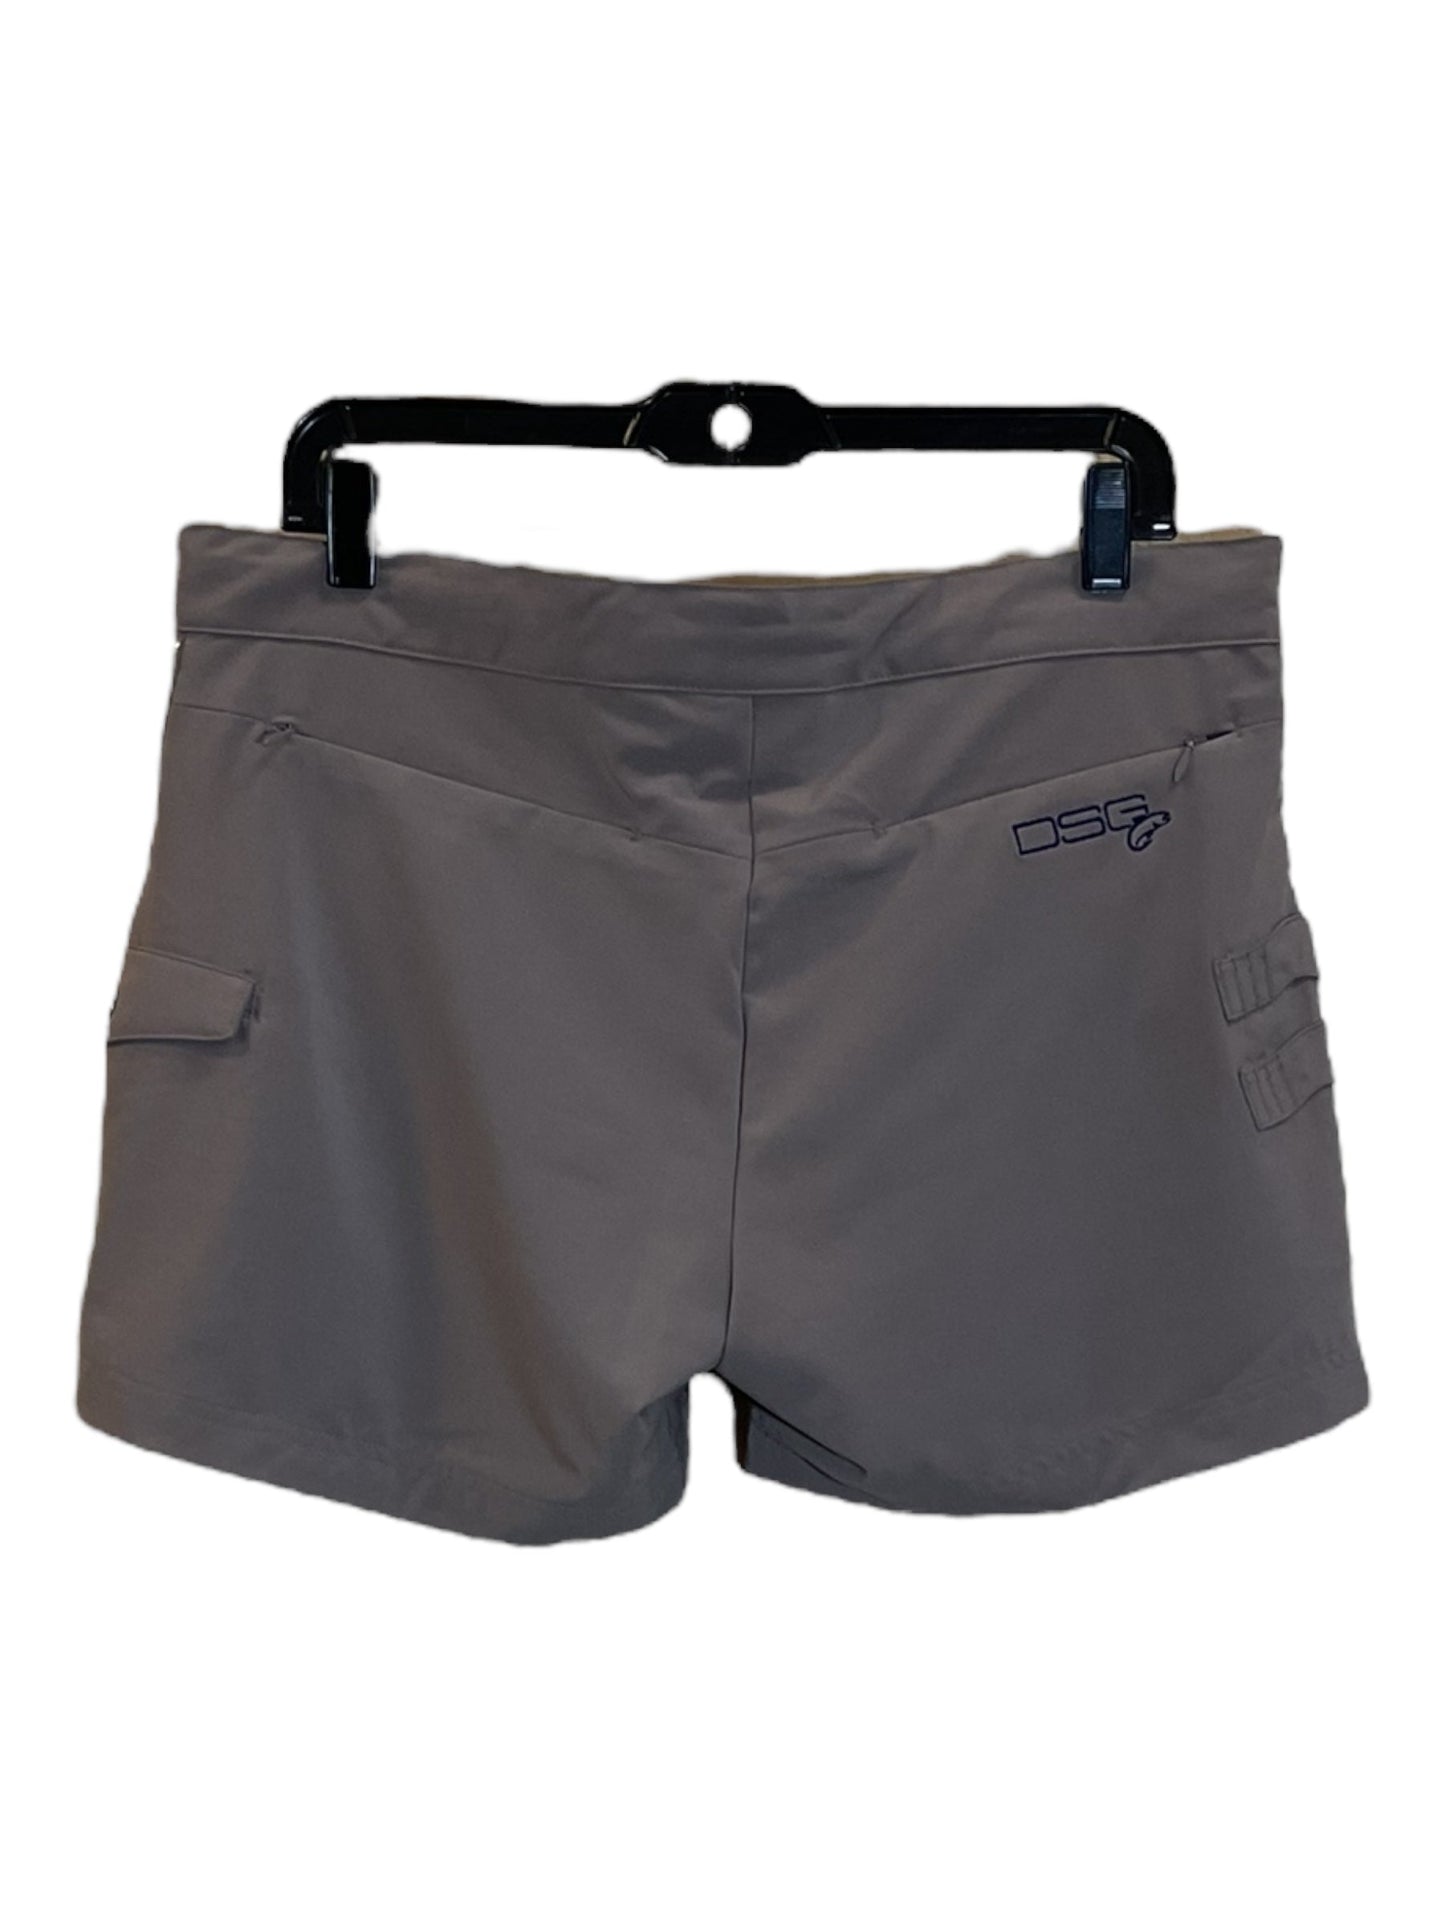 Brown Shorts Dsg Outerwear, Size L